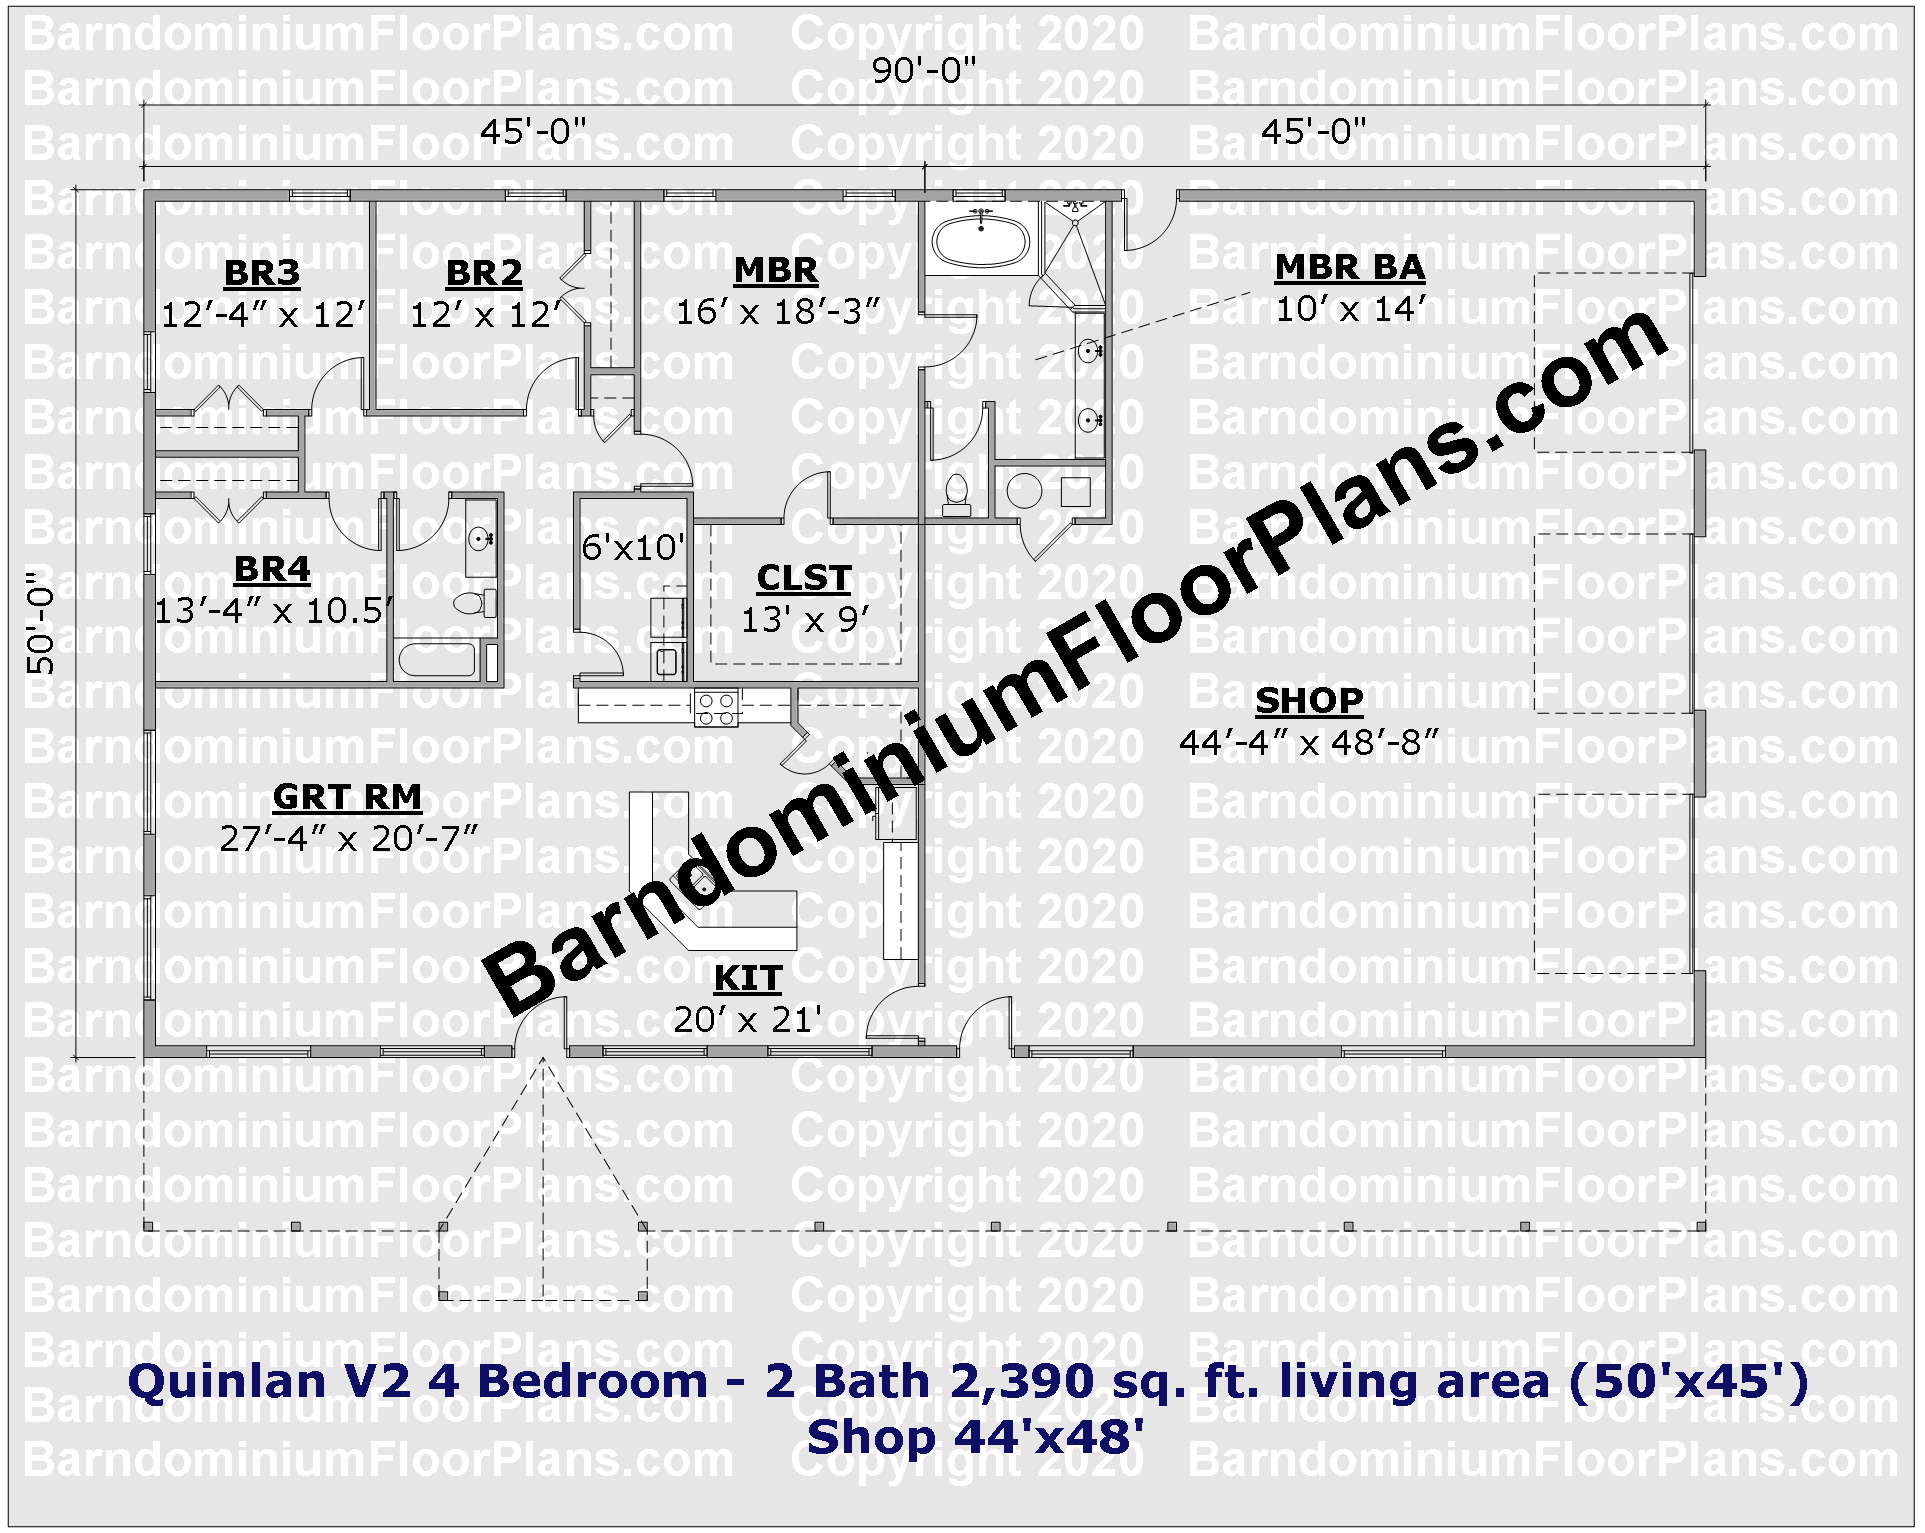 Quinlan V2 4 bedroom 2 bath 2390 sq ft Barndominium